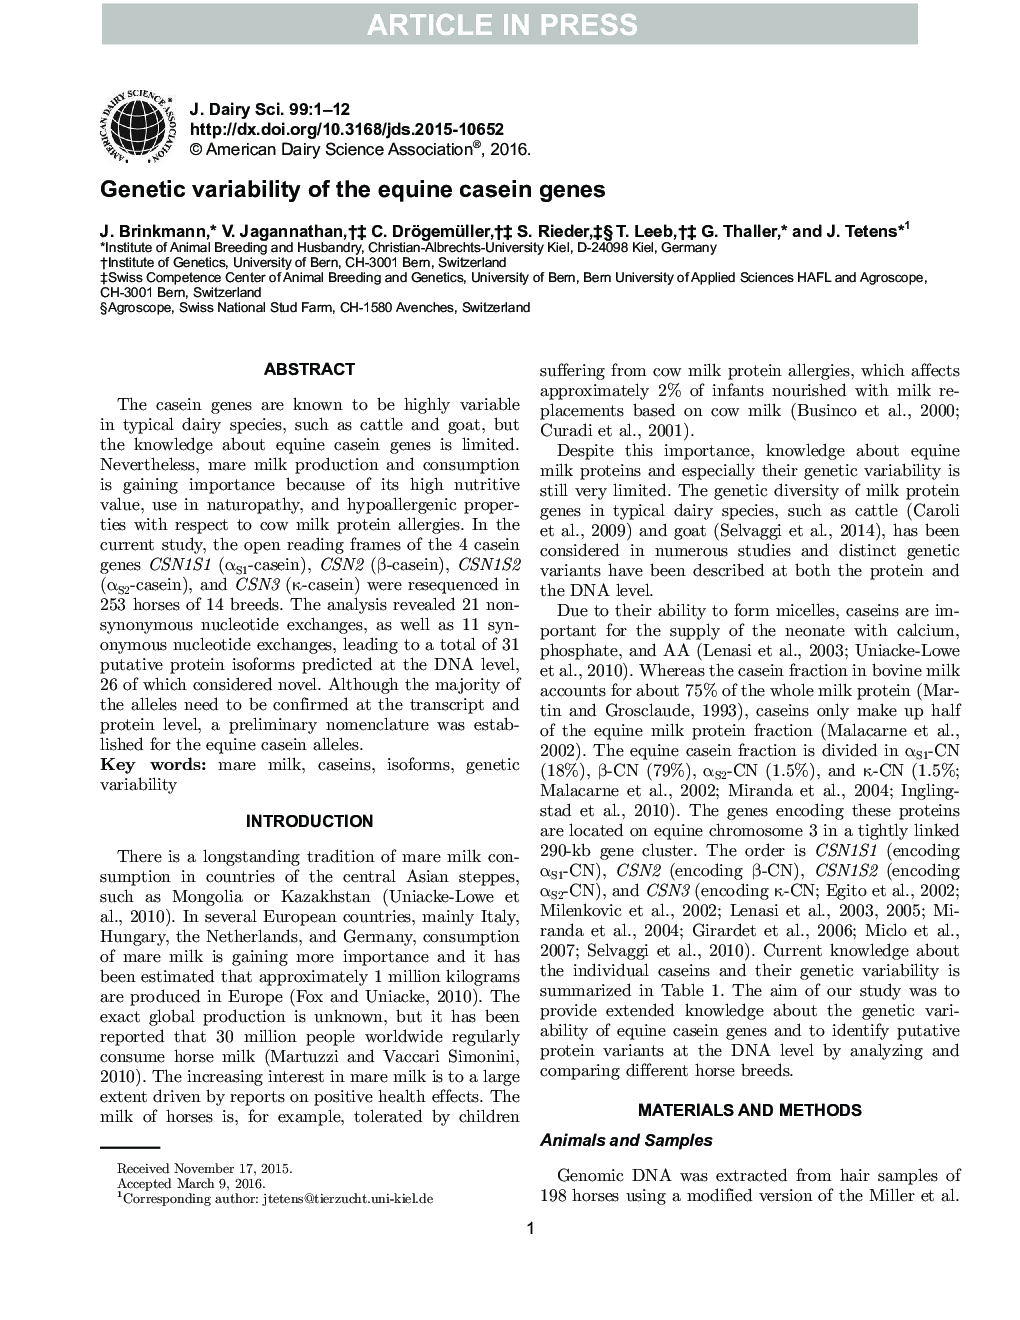 Genetic variability of the equine casein genes